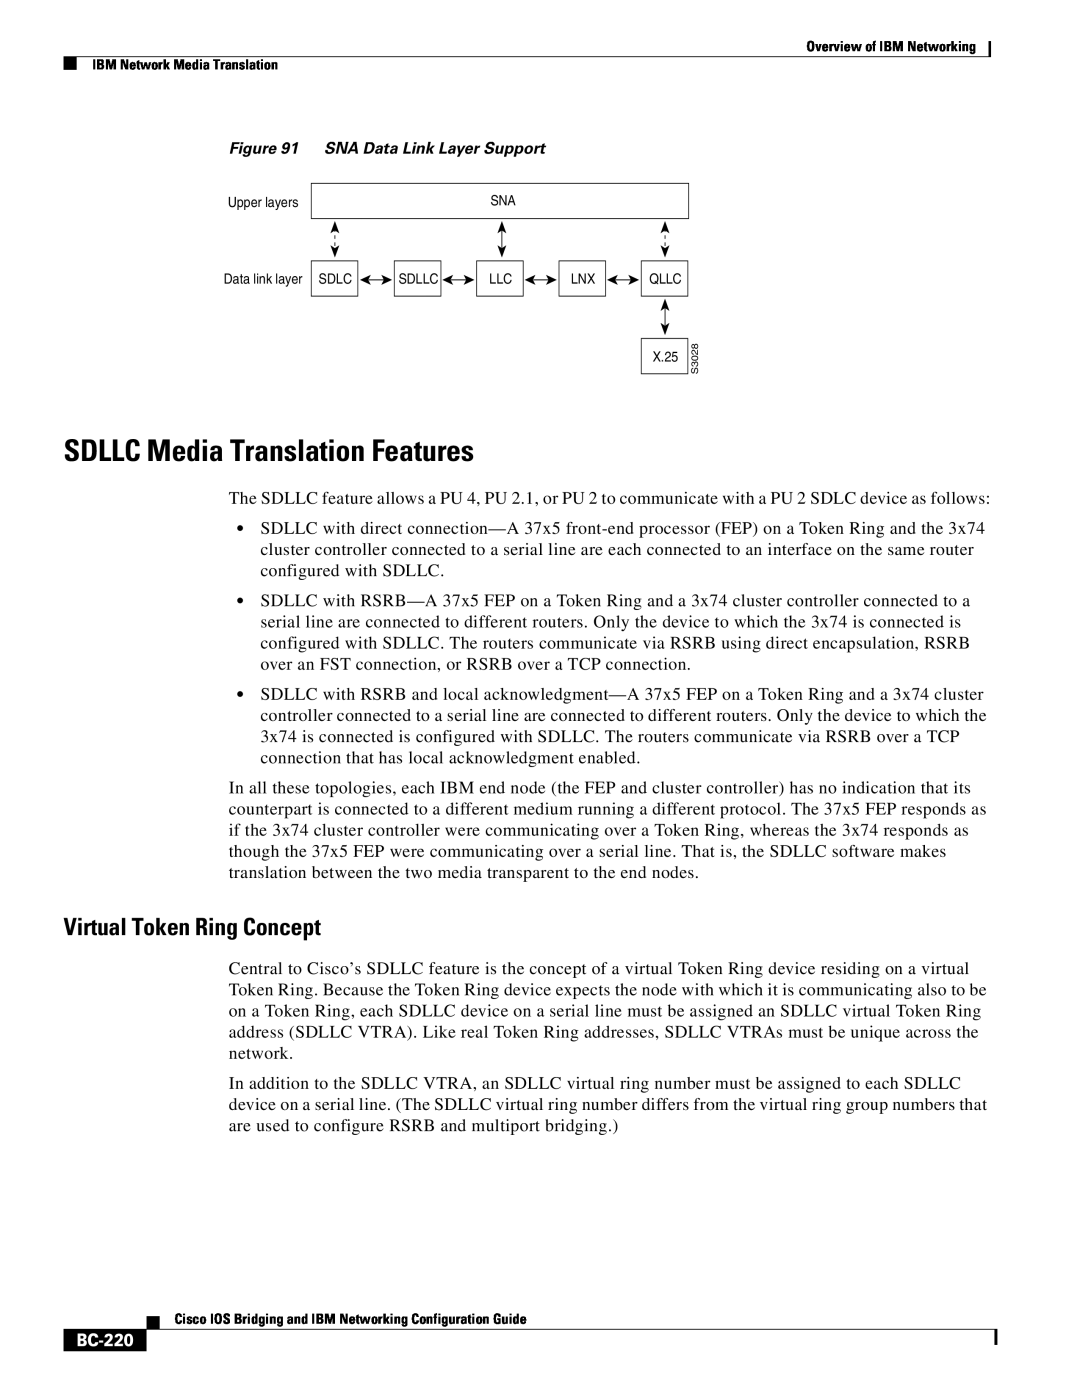 IBM BC-203 manual SDLLC Media Translation Features, Virtual Token Ring Concept, BC-220 